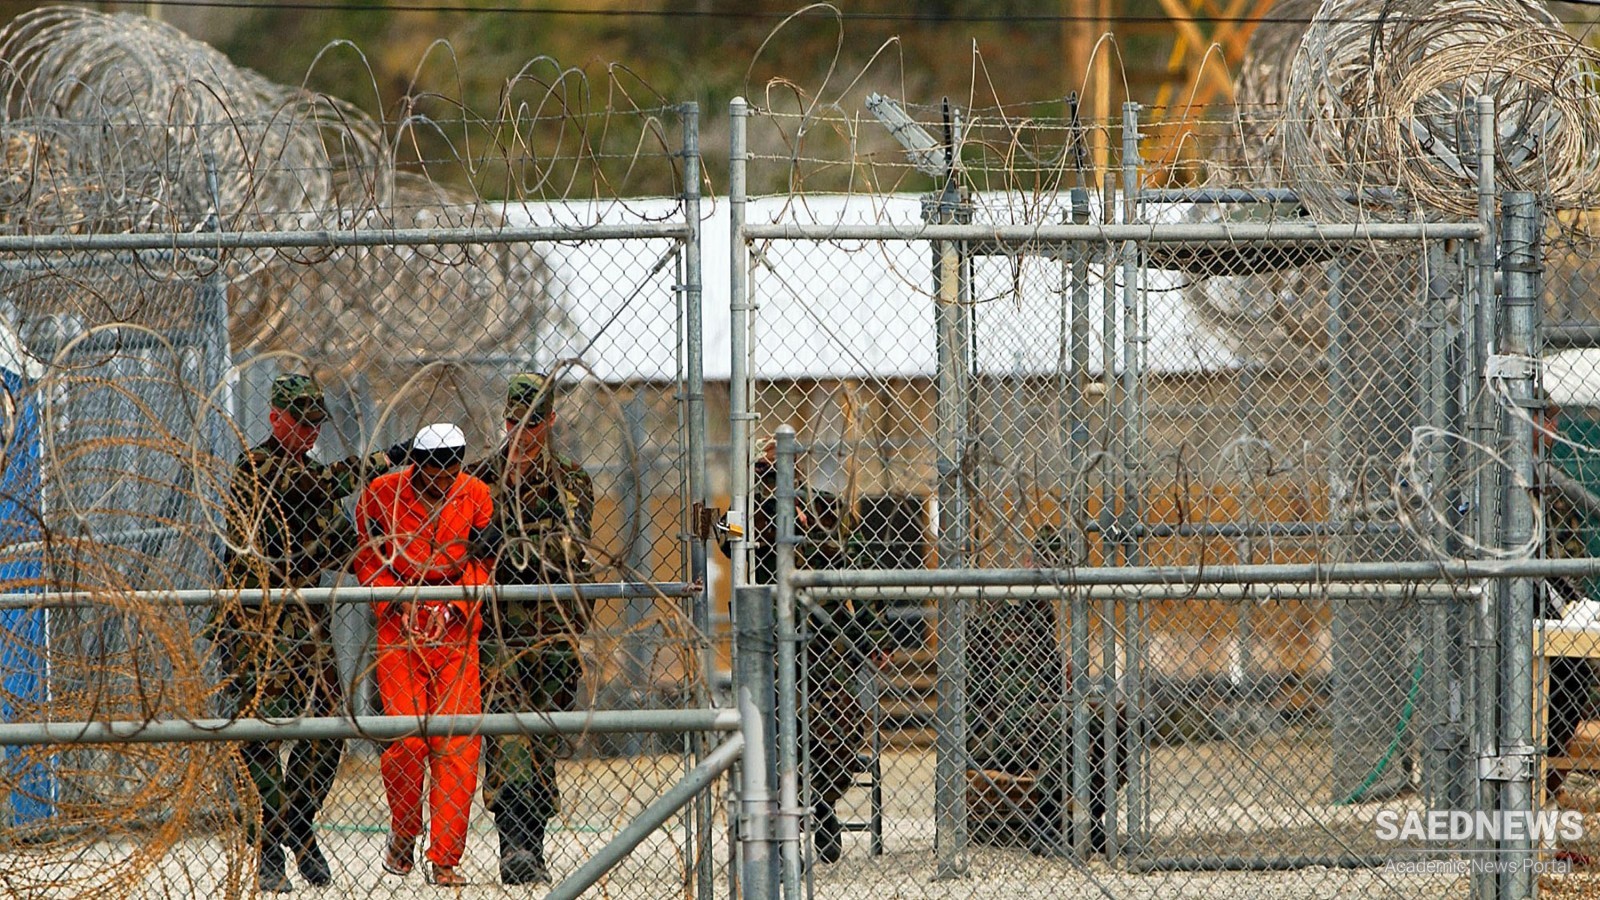 American Strategic Fiasco: Guantanamo Inmate in Afghan Presidential Palace